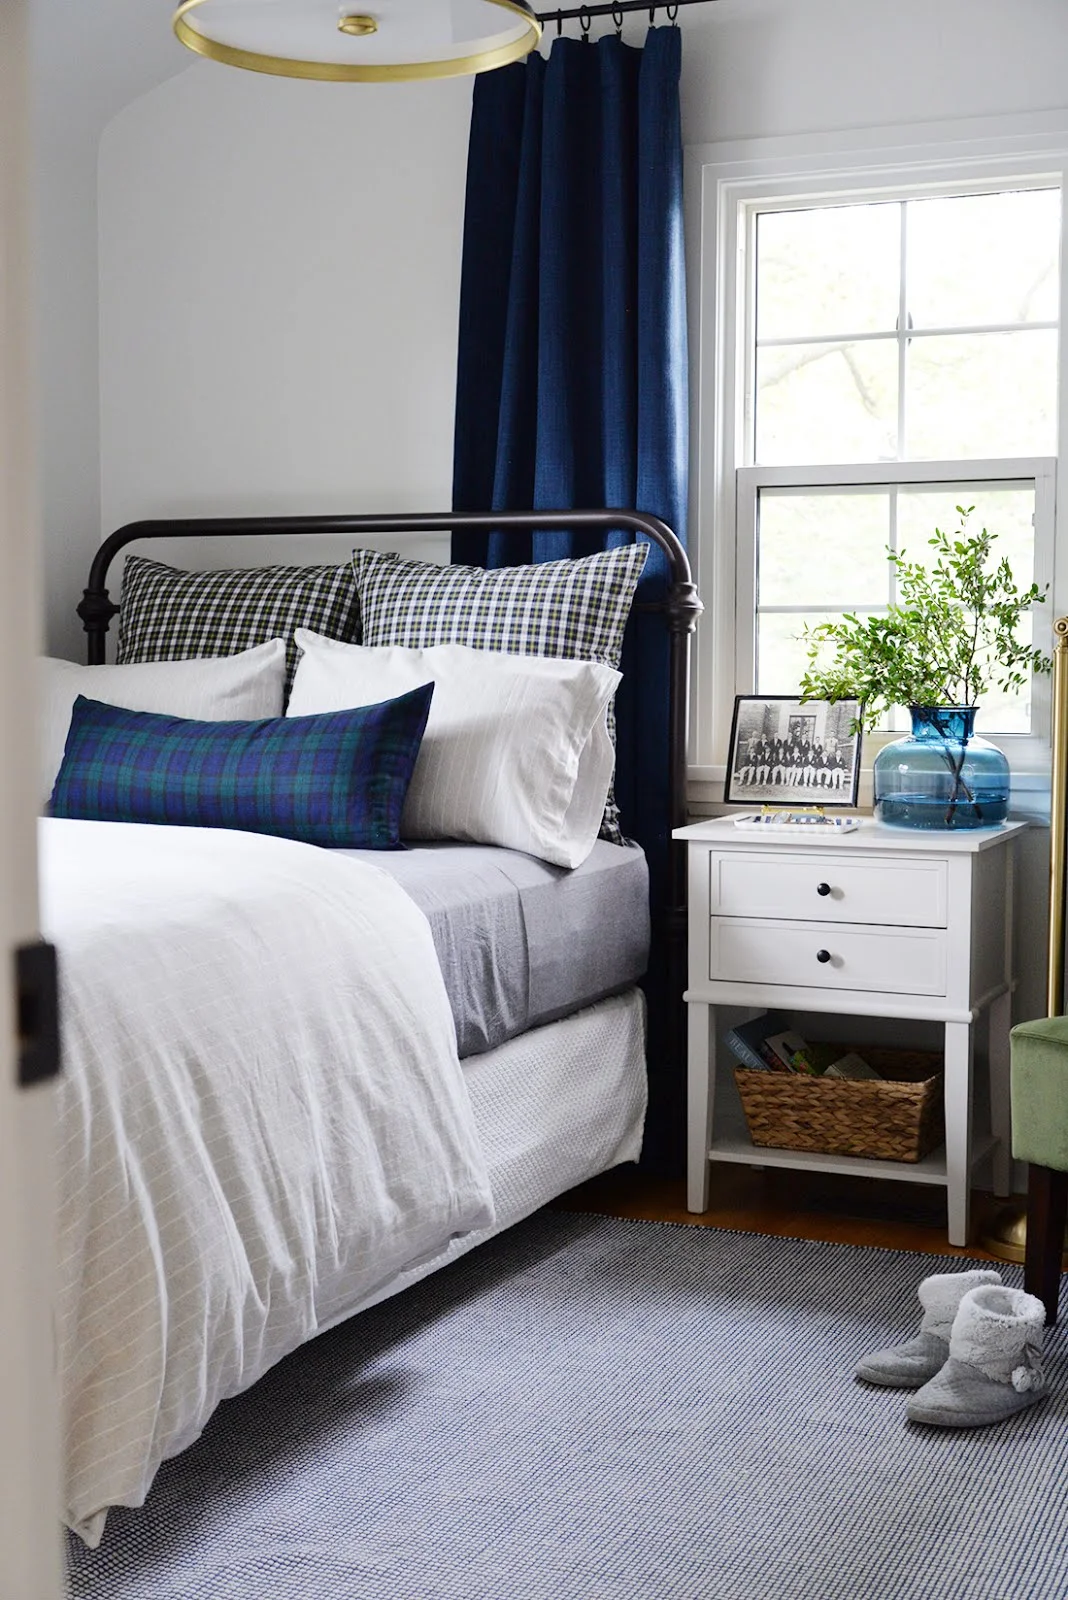 small guest bedroom ideas, cozy guest bedroom, farmhouse guest bedroom, guest bedroom decor, bedroom renovation